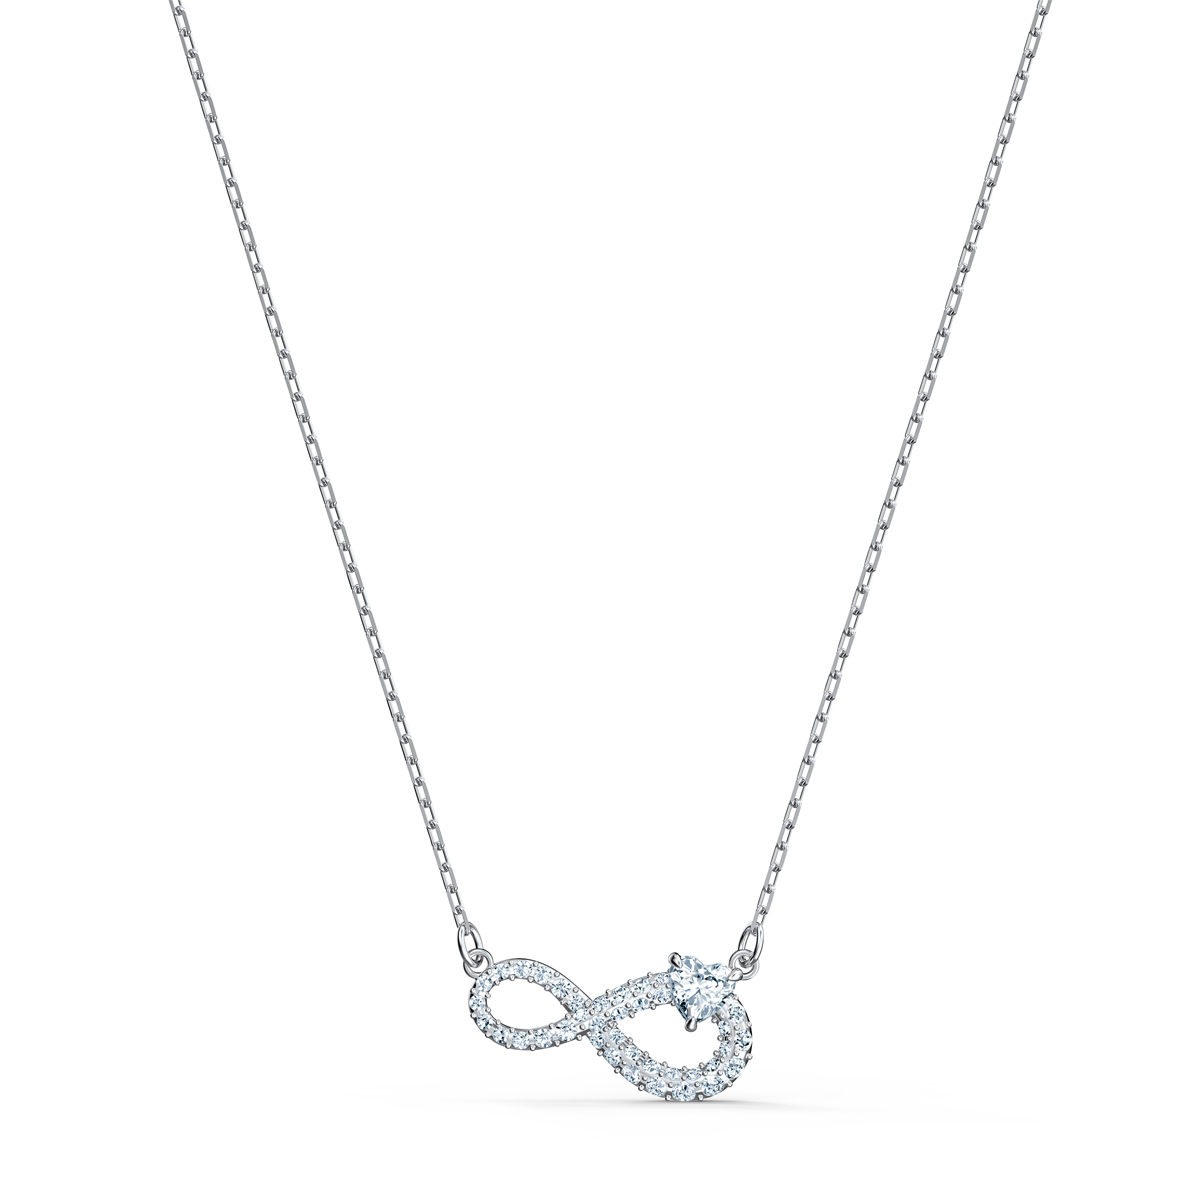 Swarovski Crystal and Rhodium Silver Infinity Pendant Necklace